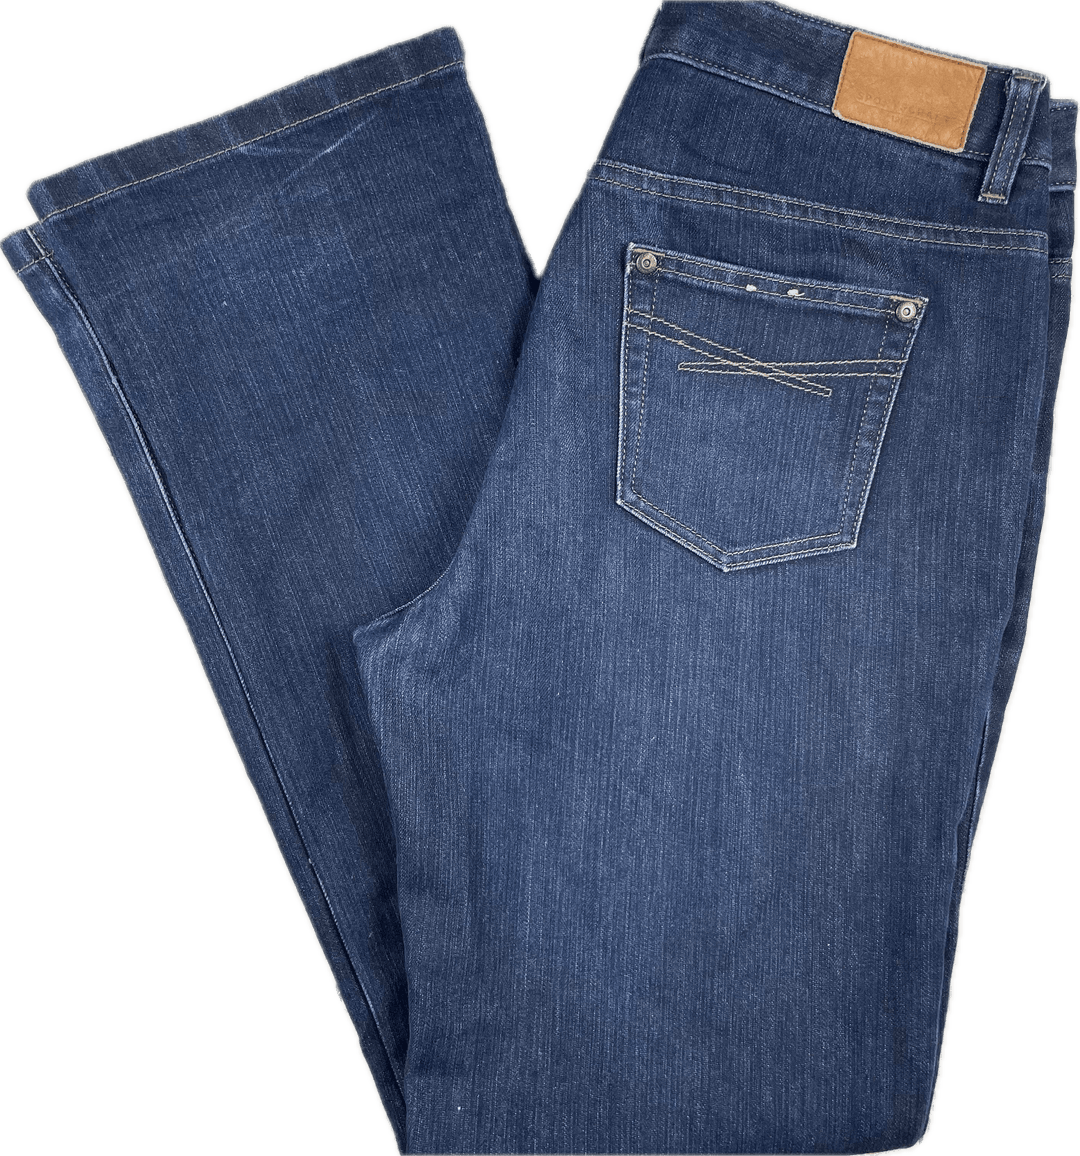 Sportscraft 'Simone' Straight Leg Stretch Denim jeans - Size 11 - Jean Pool